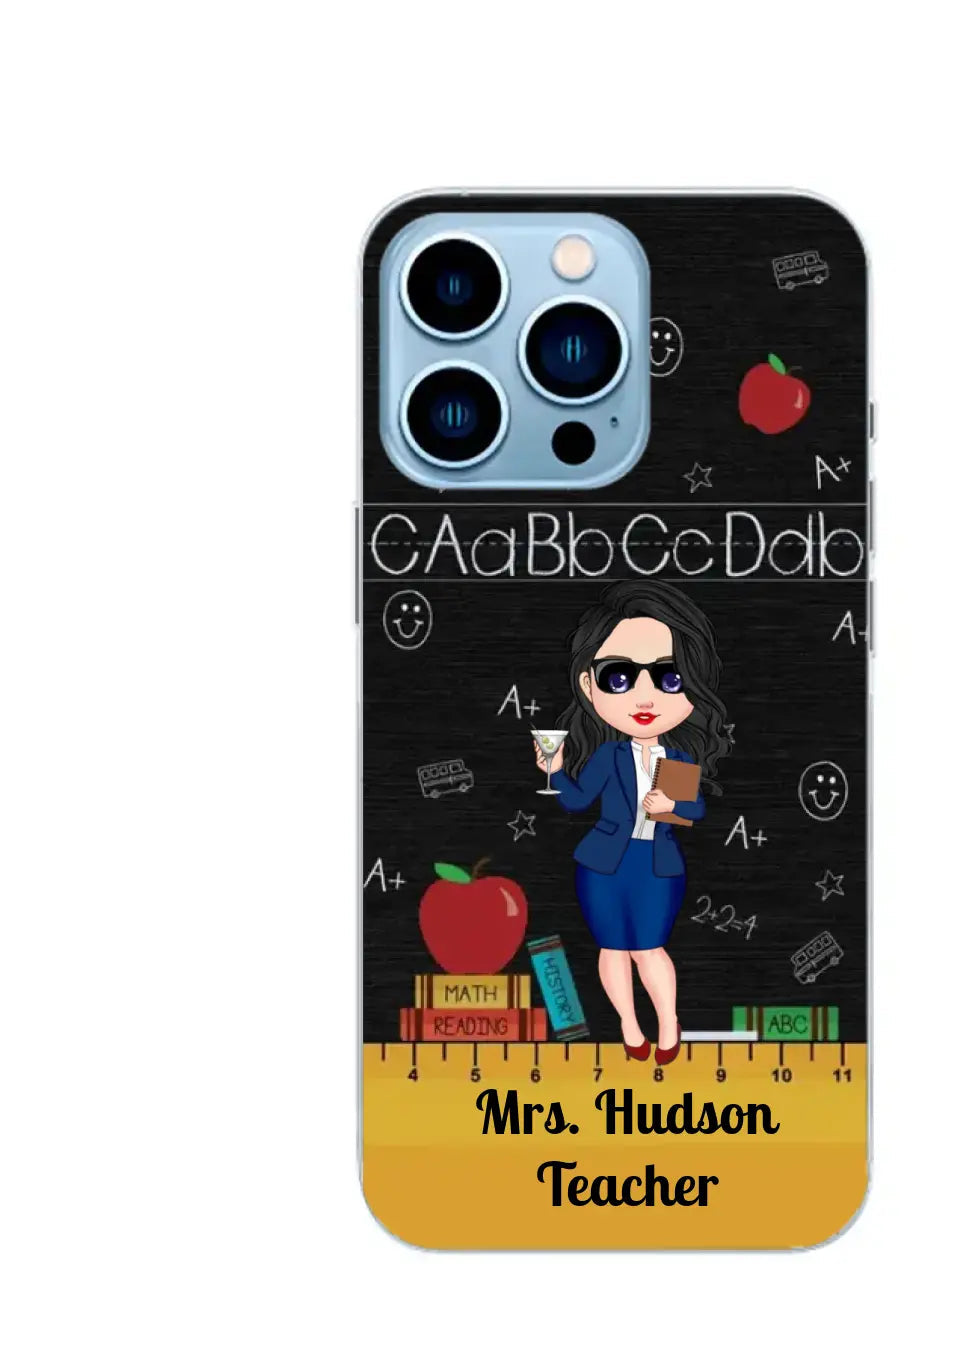 Teacher Blackboard Background Personalized iPhone case - Clear Case